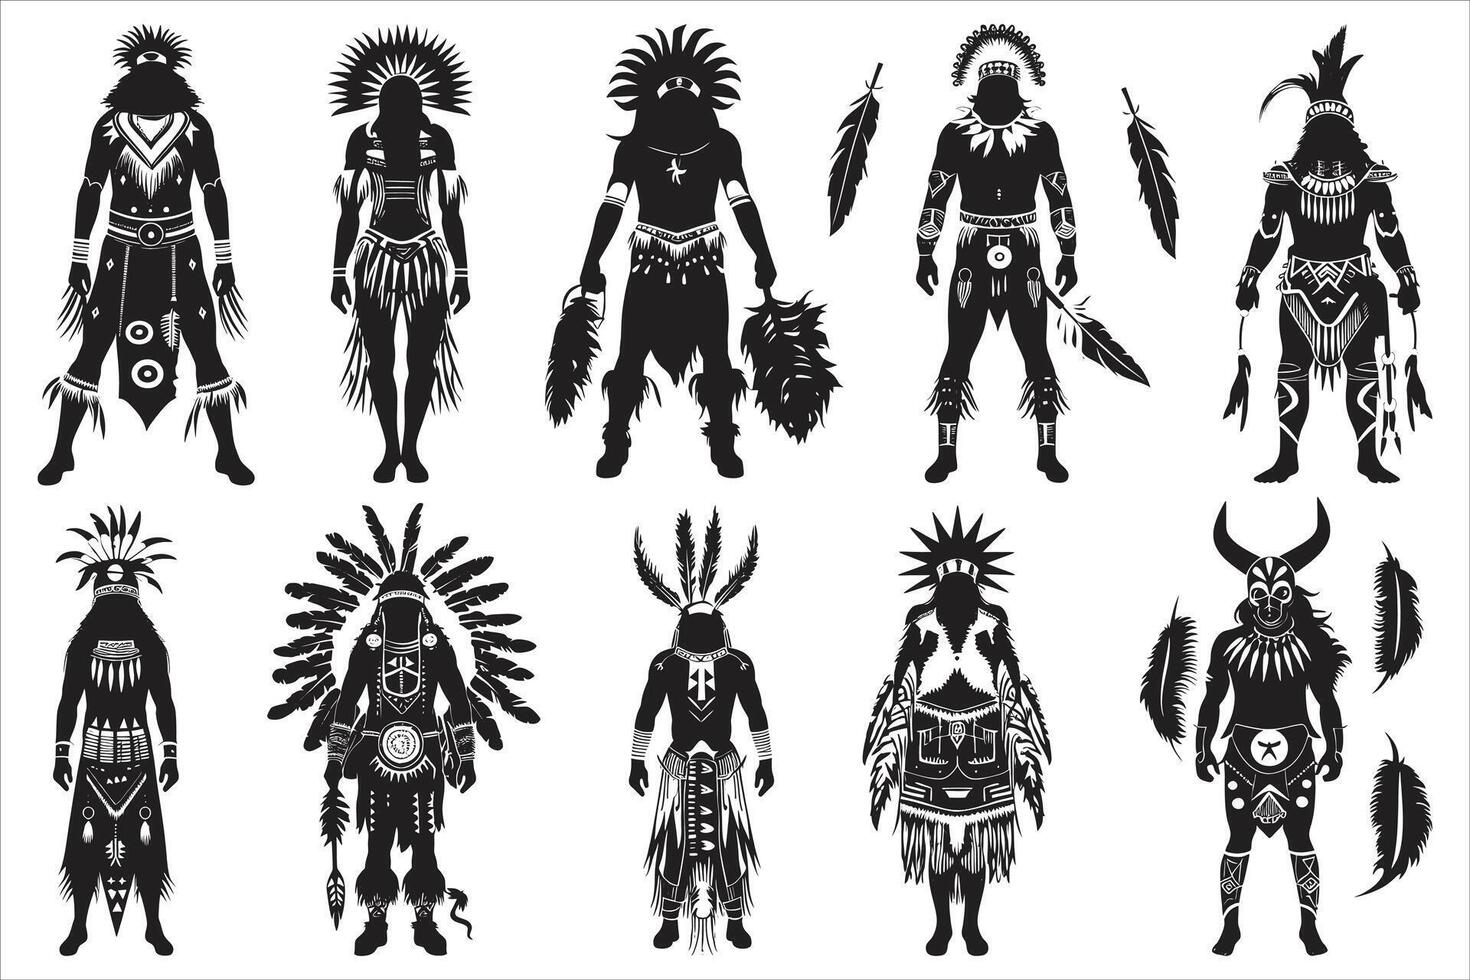 Native American Indian costume black silhouette, Young woman in costume of American Indian. Silhouette of beautiful Indian women vector